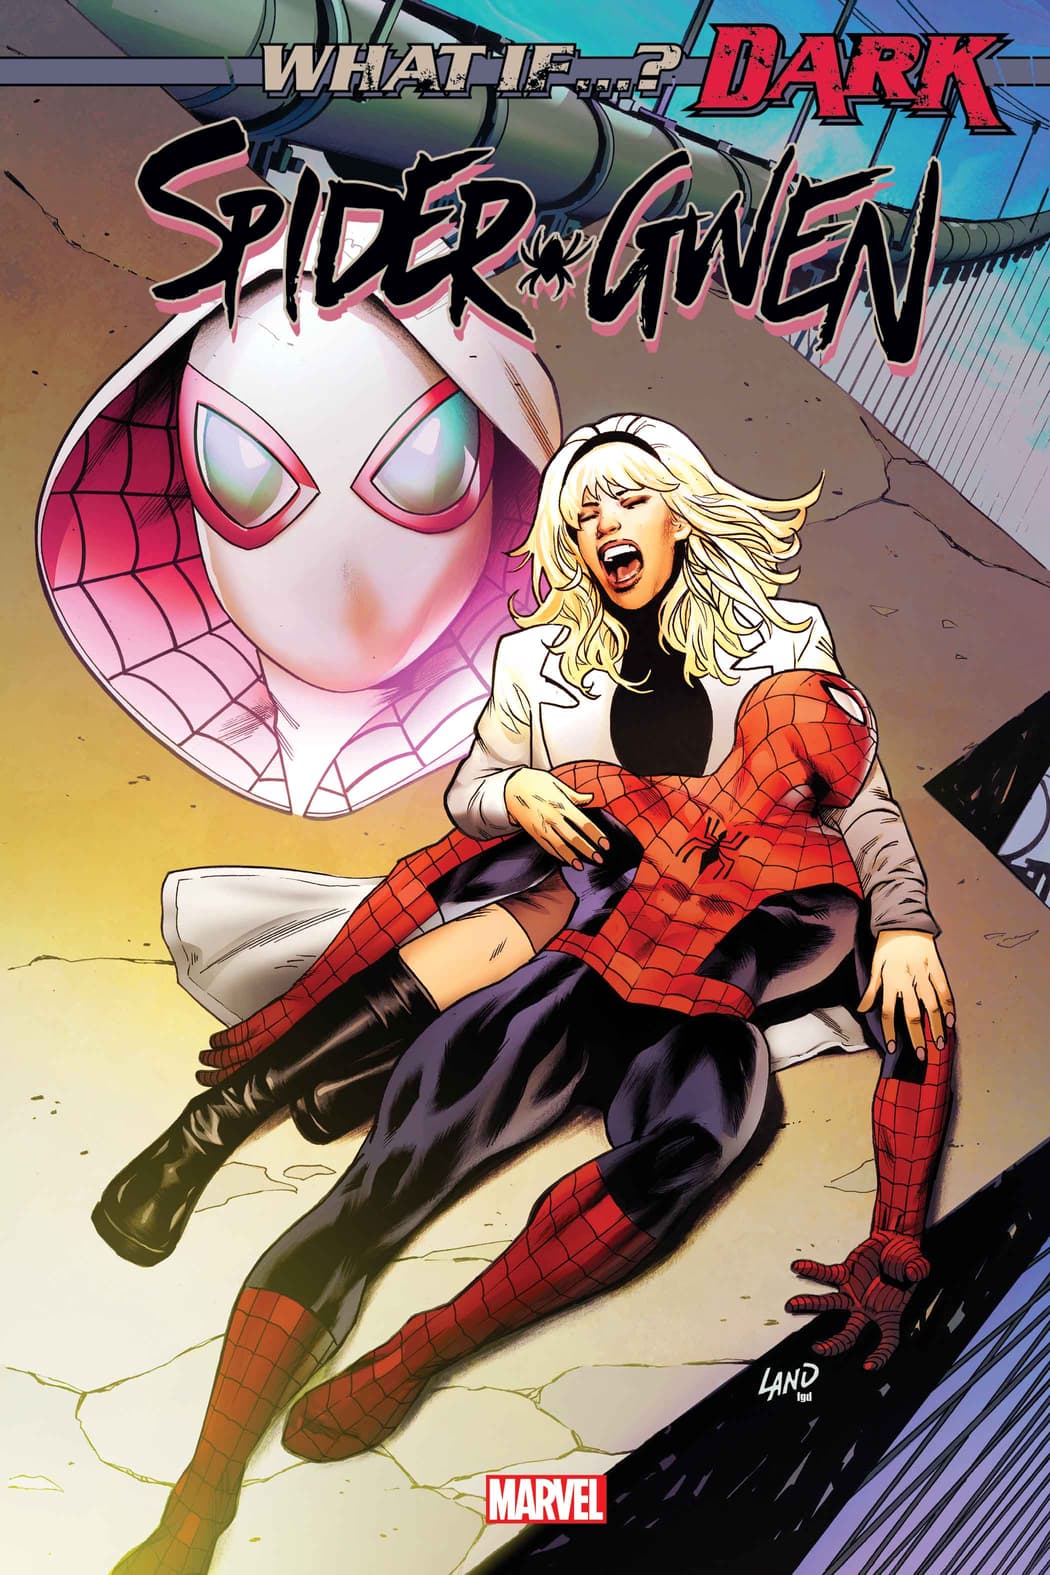 What If: Dark Spider-Gwen cover by Greg Land